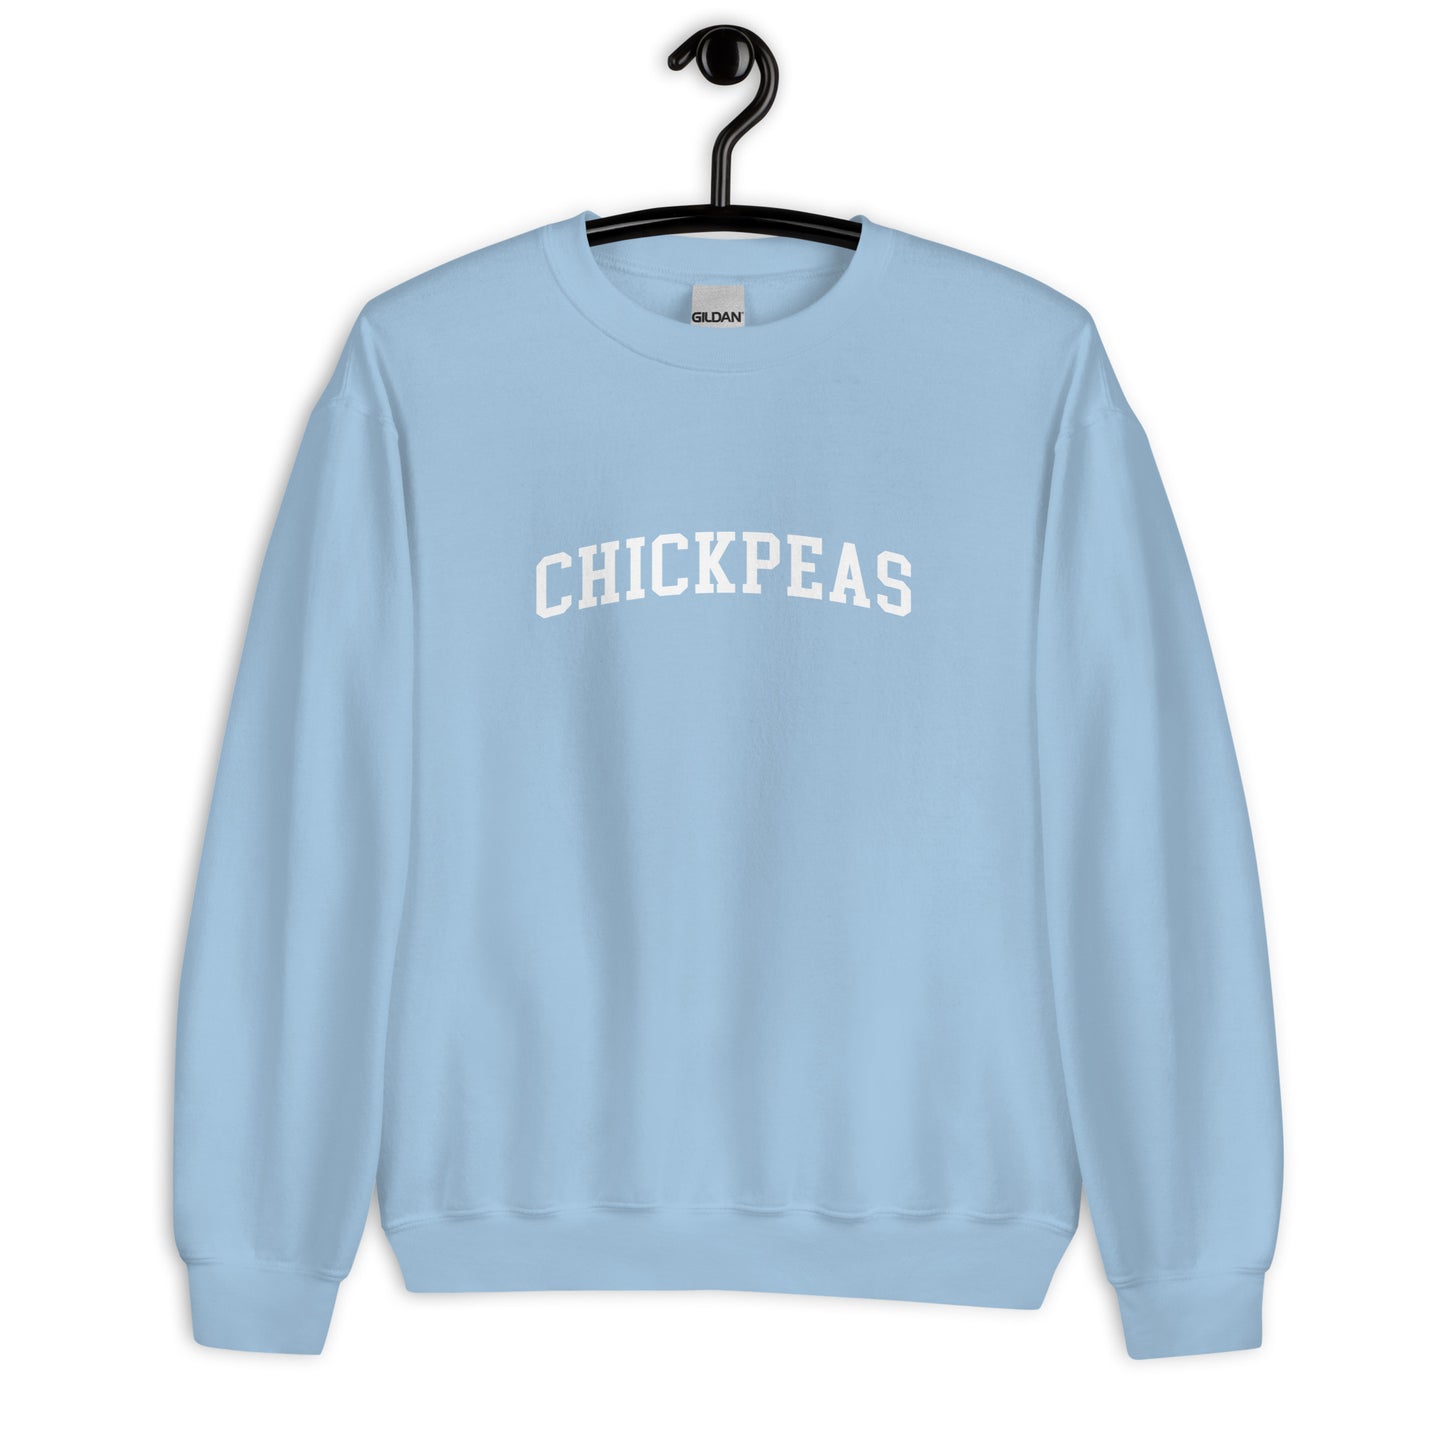 Chickpeas Sweatshirt - Arched Font